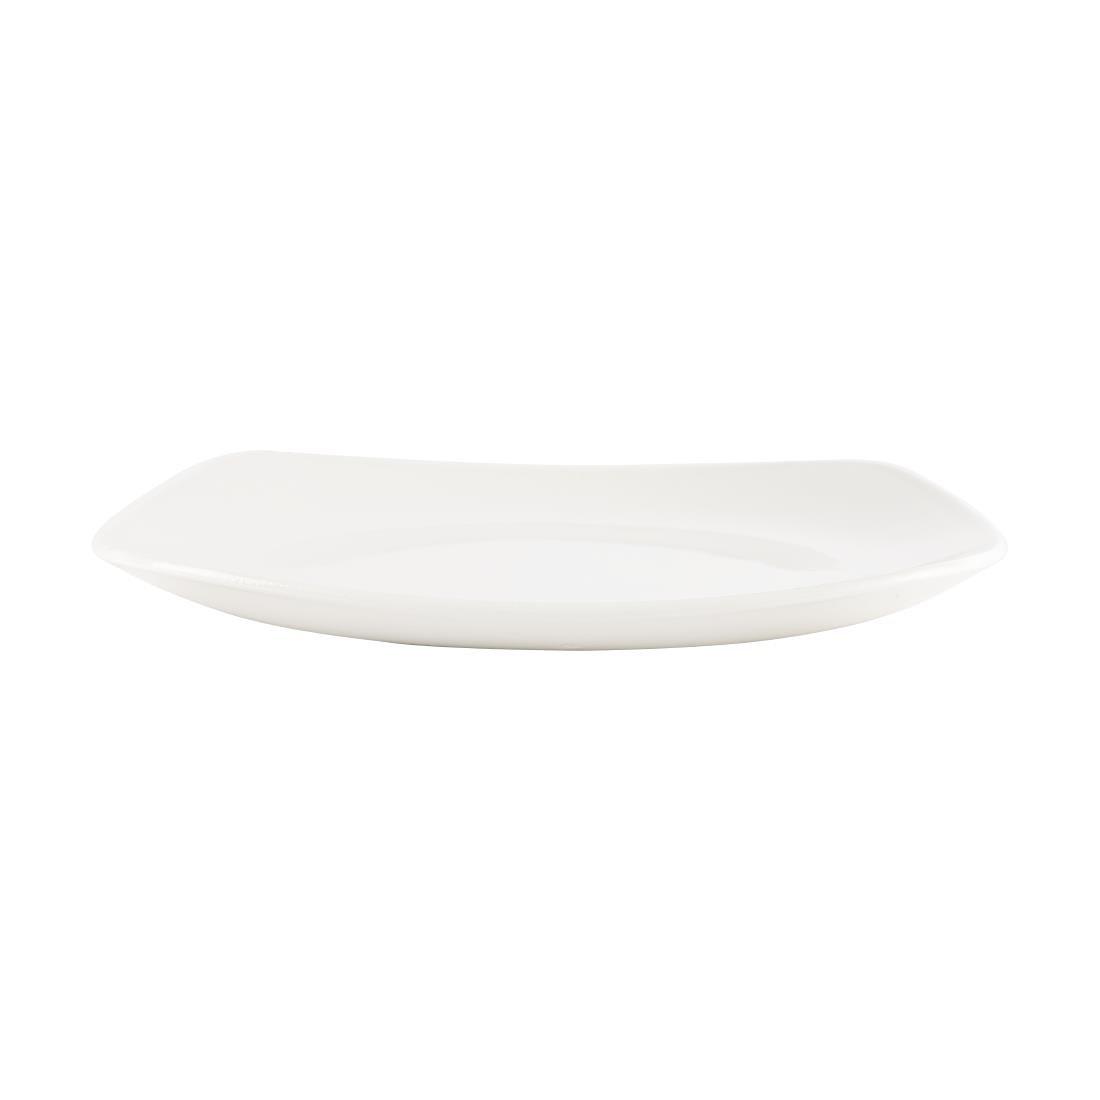 W889 - Plain Whiteware Square Plate